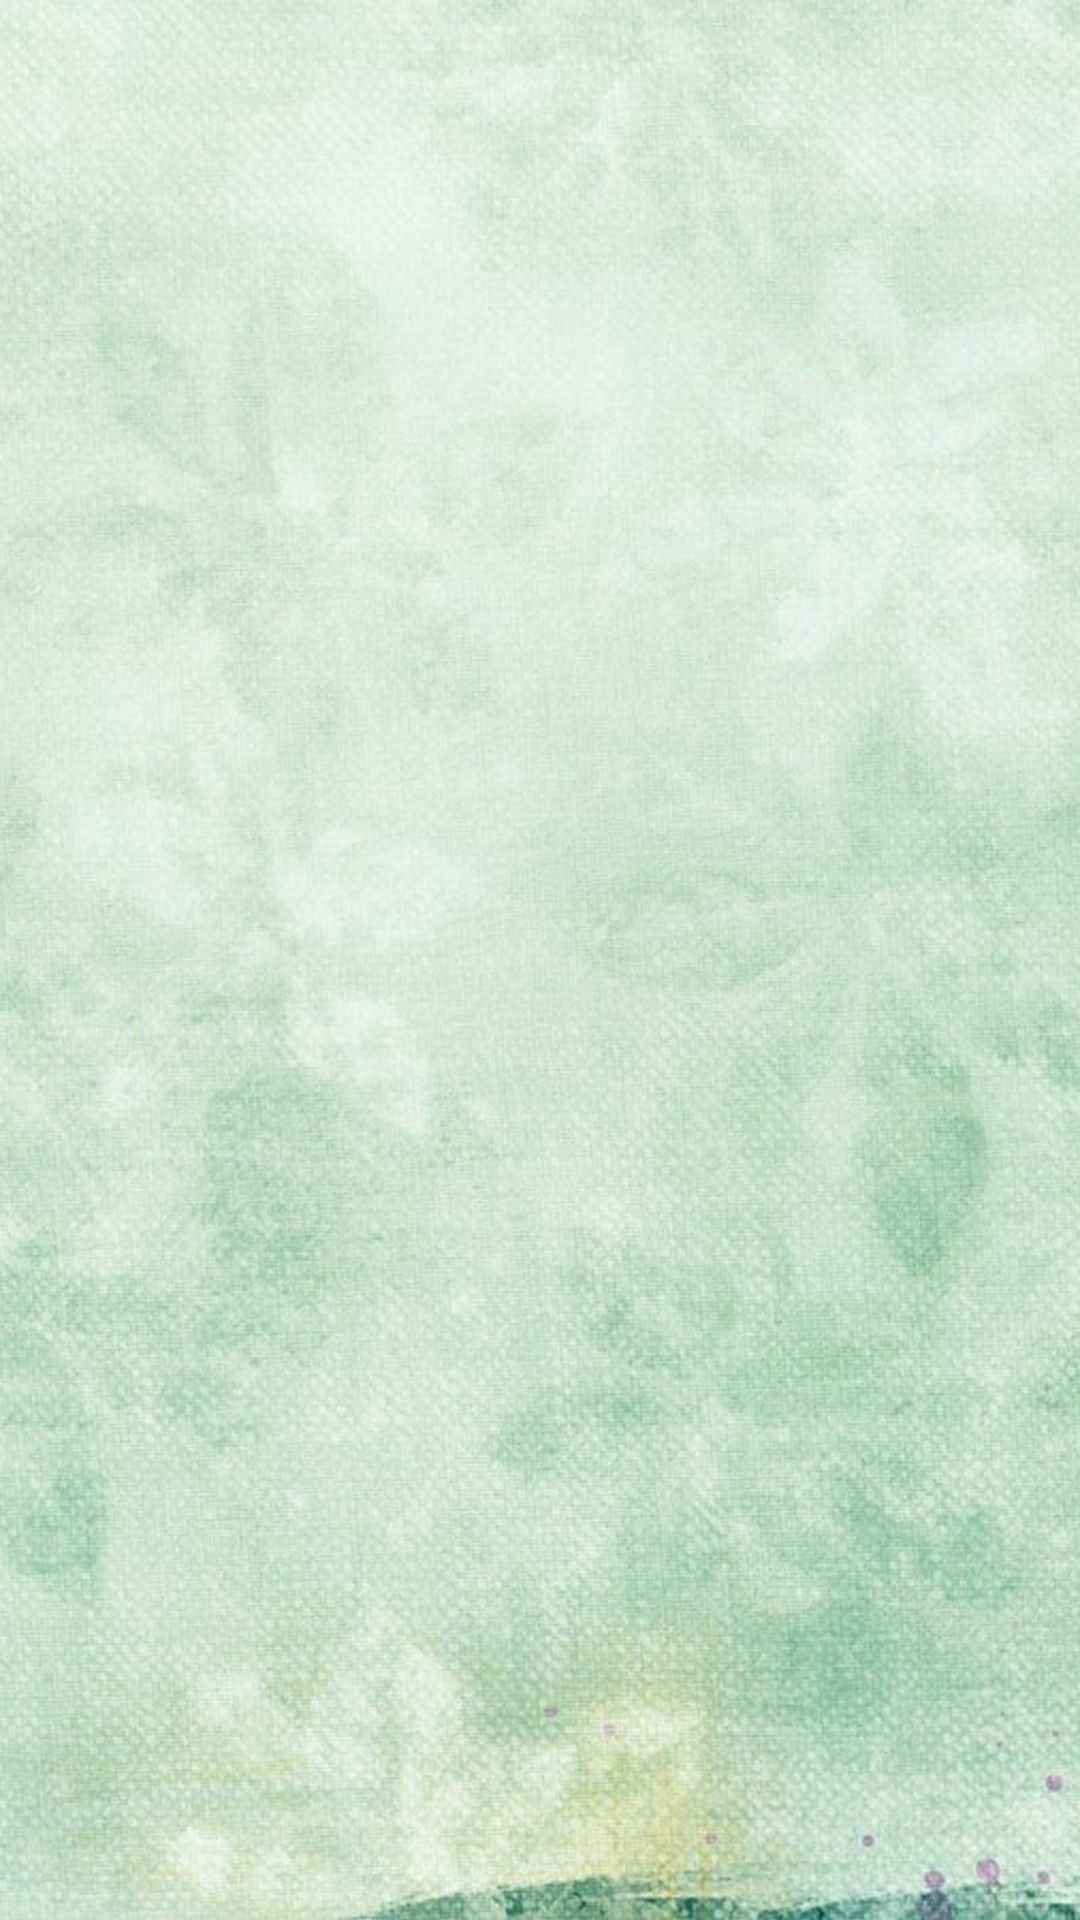 Free download Fresh Mint iPhone Wallpaper Mint green wallpaper iphone